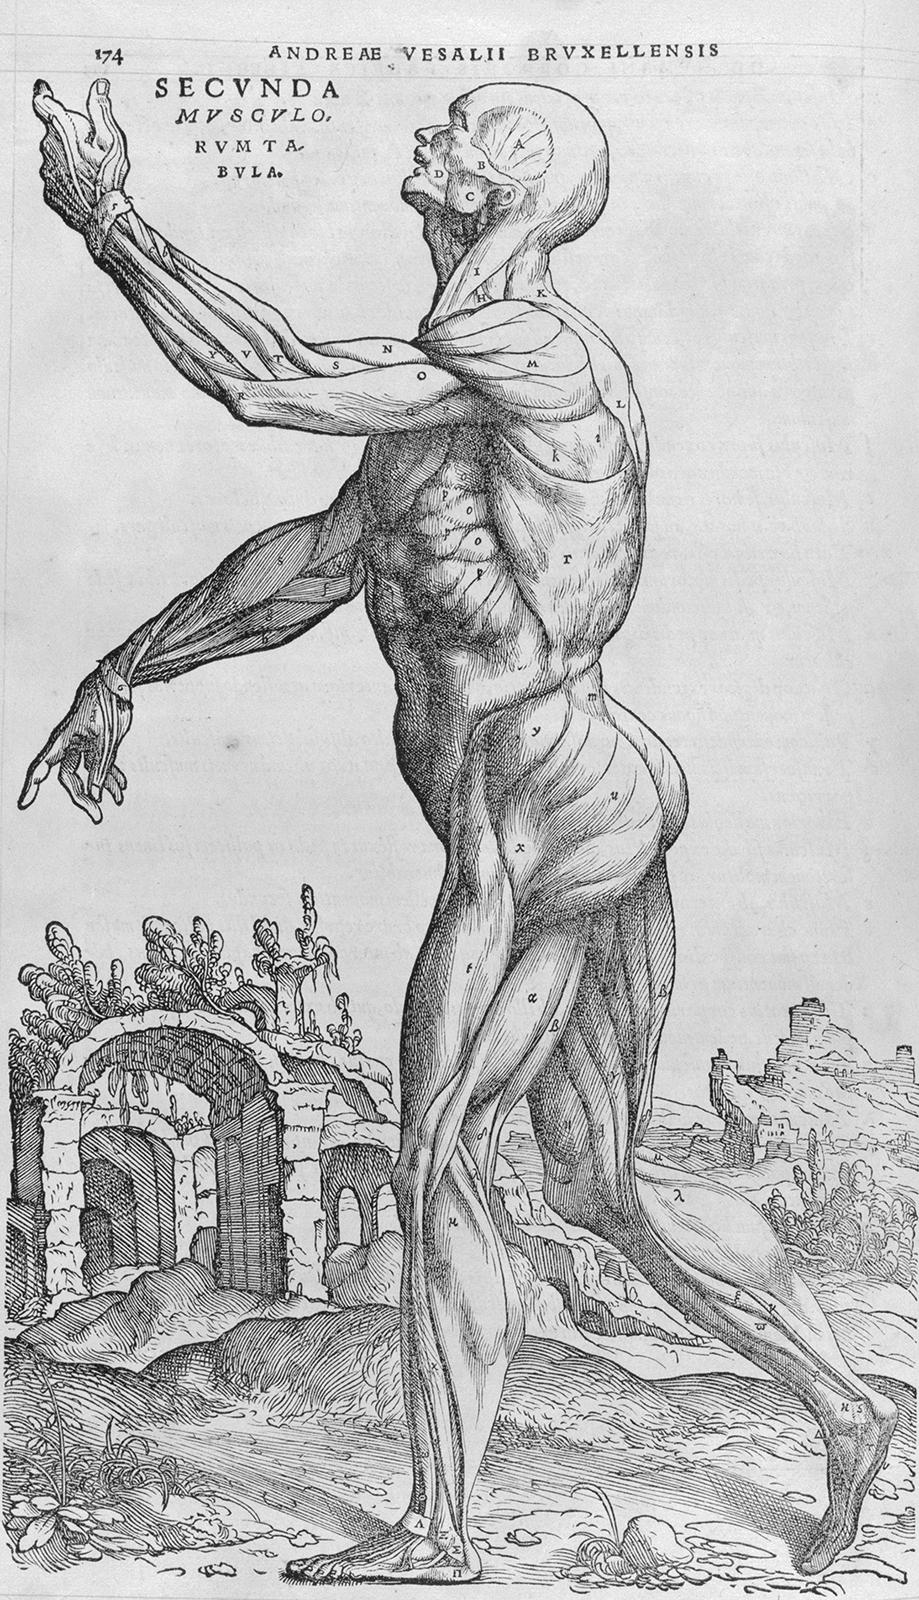 A page from De humani corporis fabrica by Andreas Vesalius (1534)